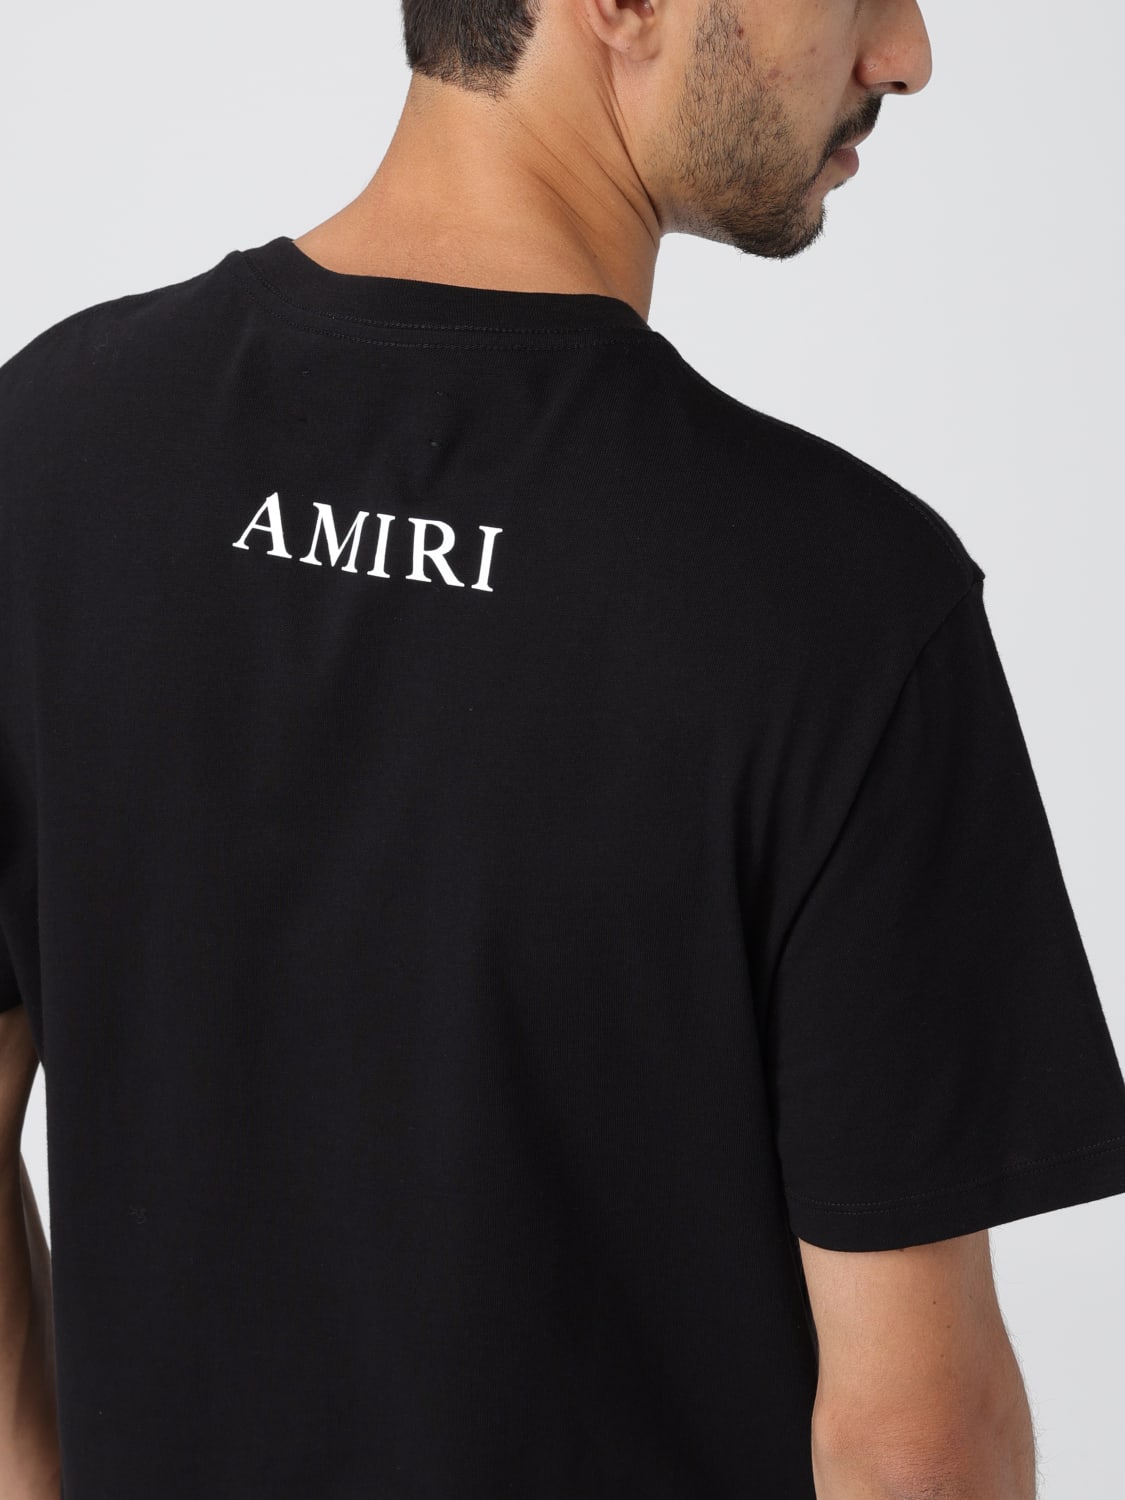 Amiri T Shirt For Man Black Amiri T Shirt Pf23mjl004 Online At Giglio